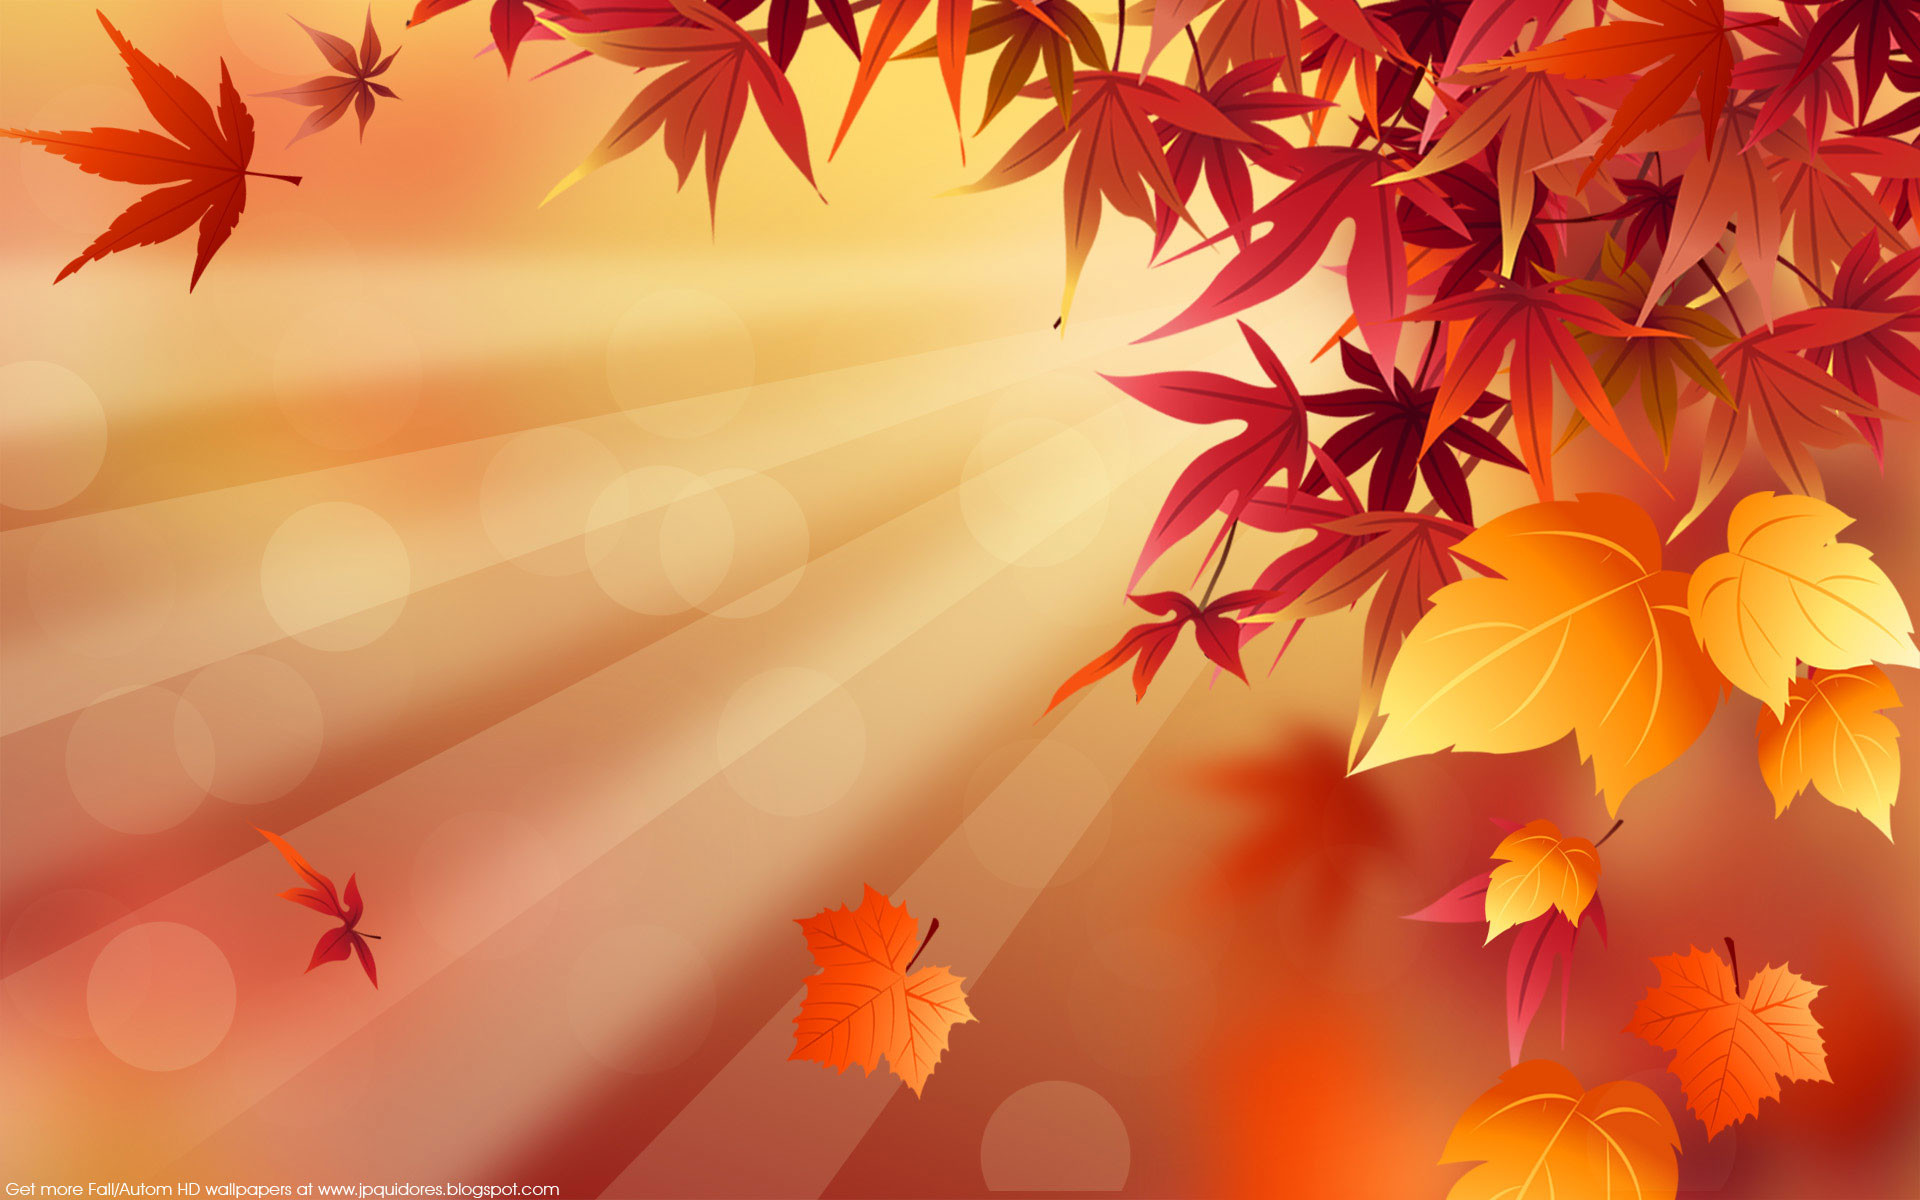 1920x1200 1000+ ideas about Fall Desktop Backgrounds on Pinterest | Fall